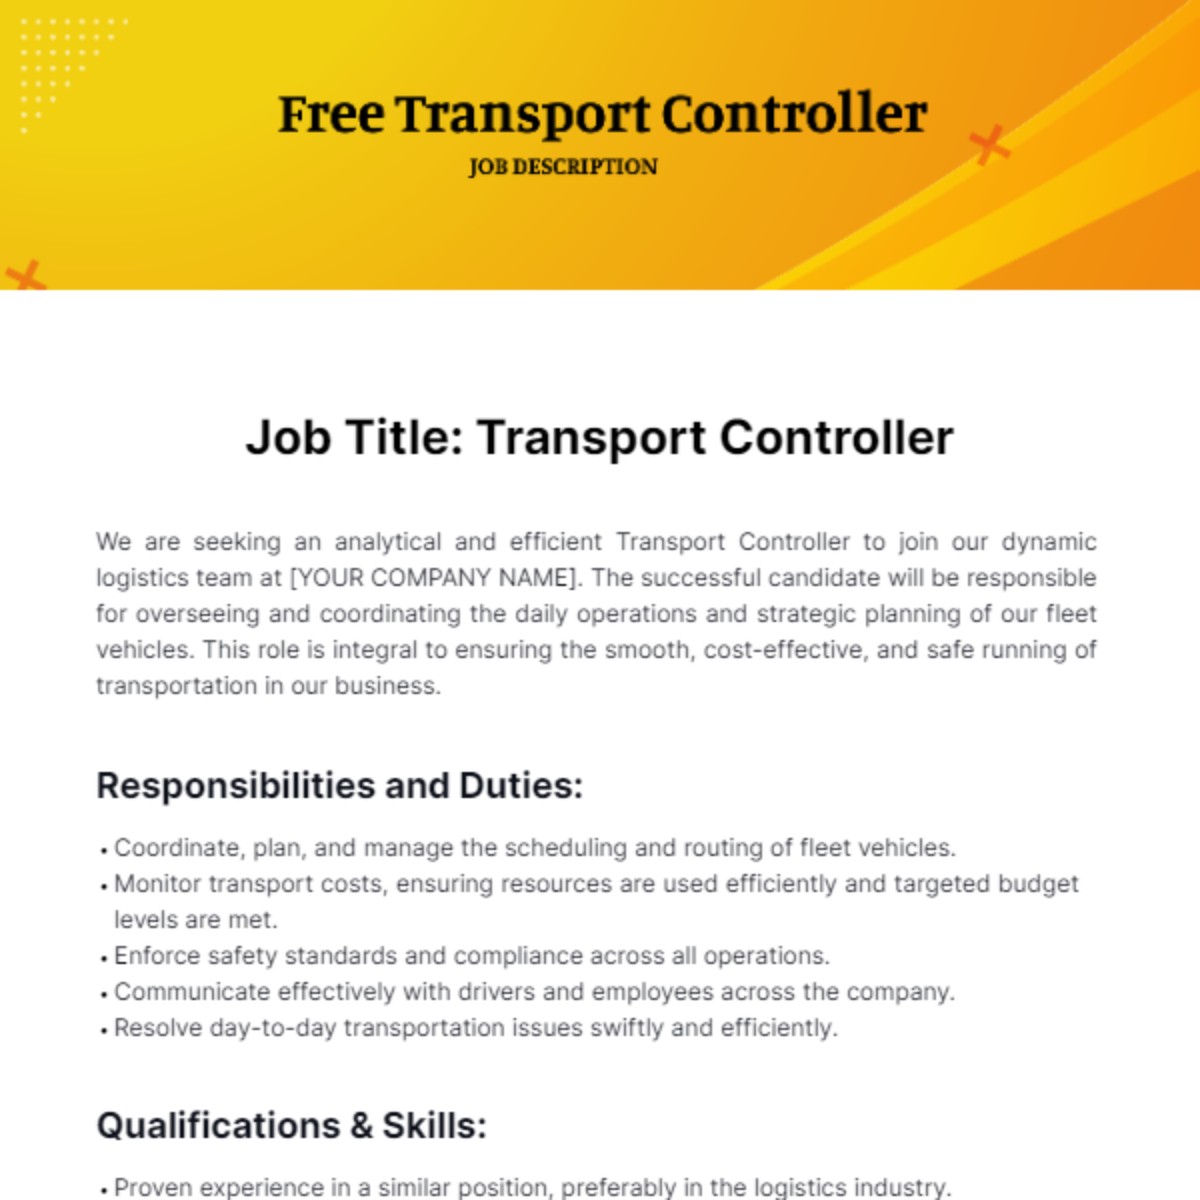 Free Transport Controller Job Description Template